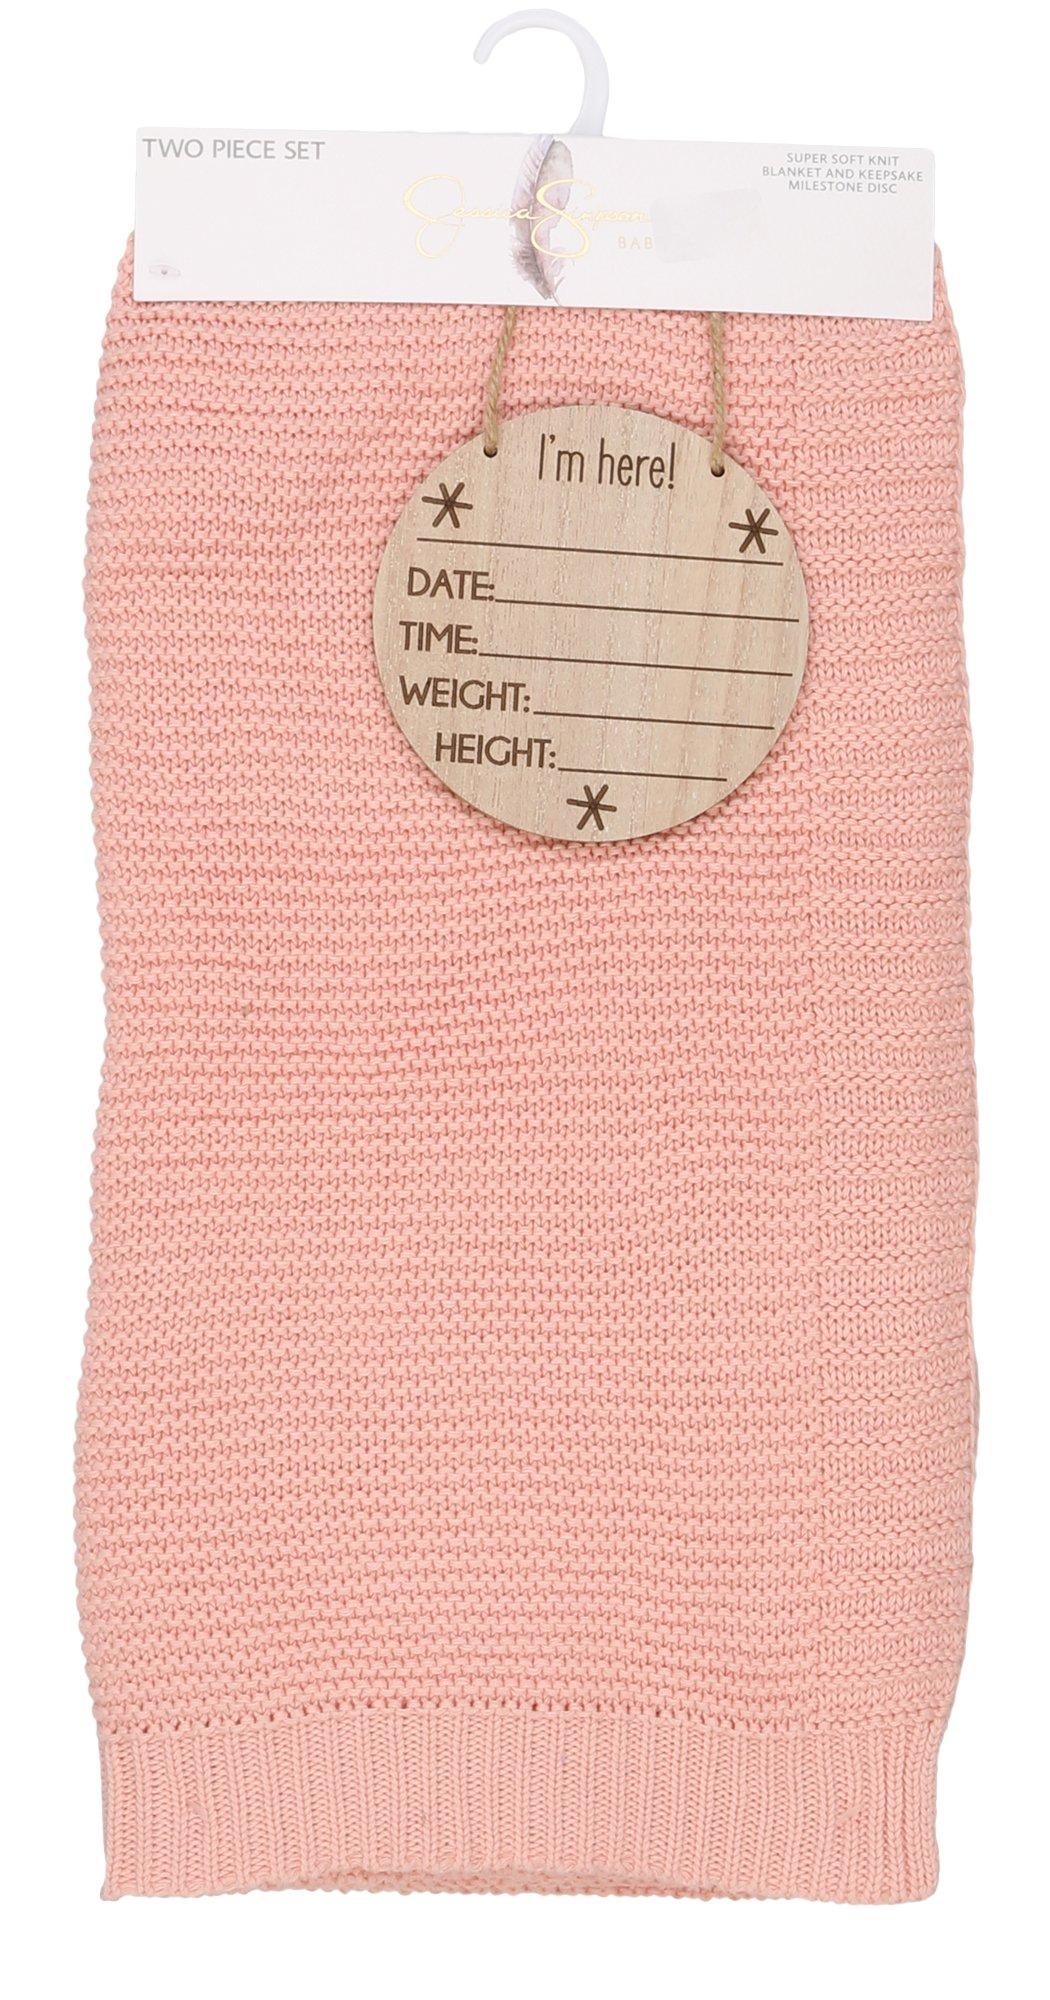 Baby 2 Pc Blanket & Milestone Disc - Pink